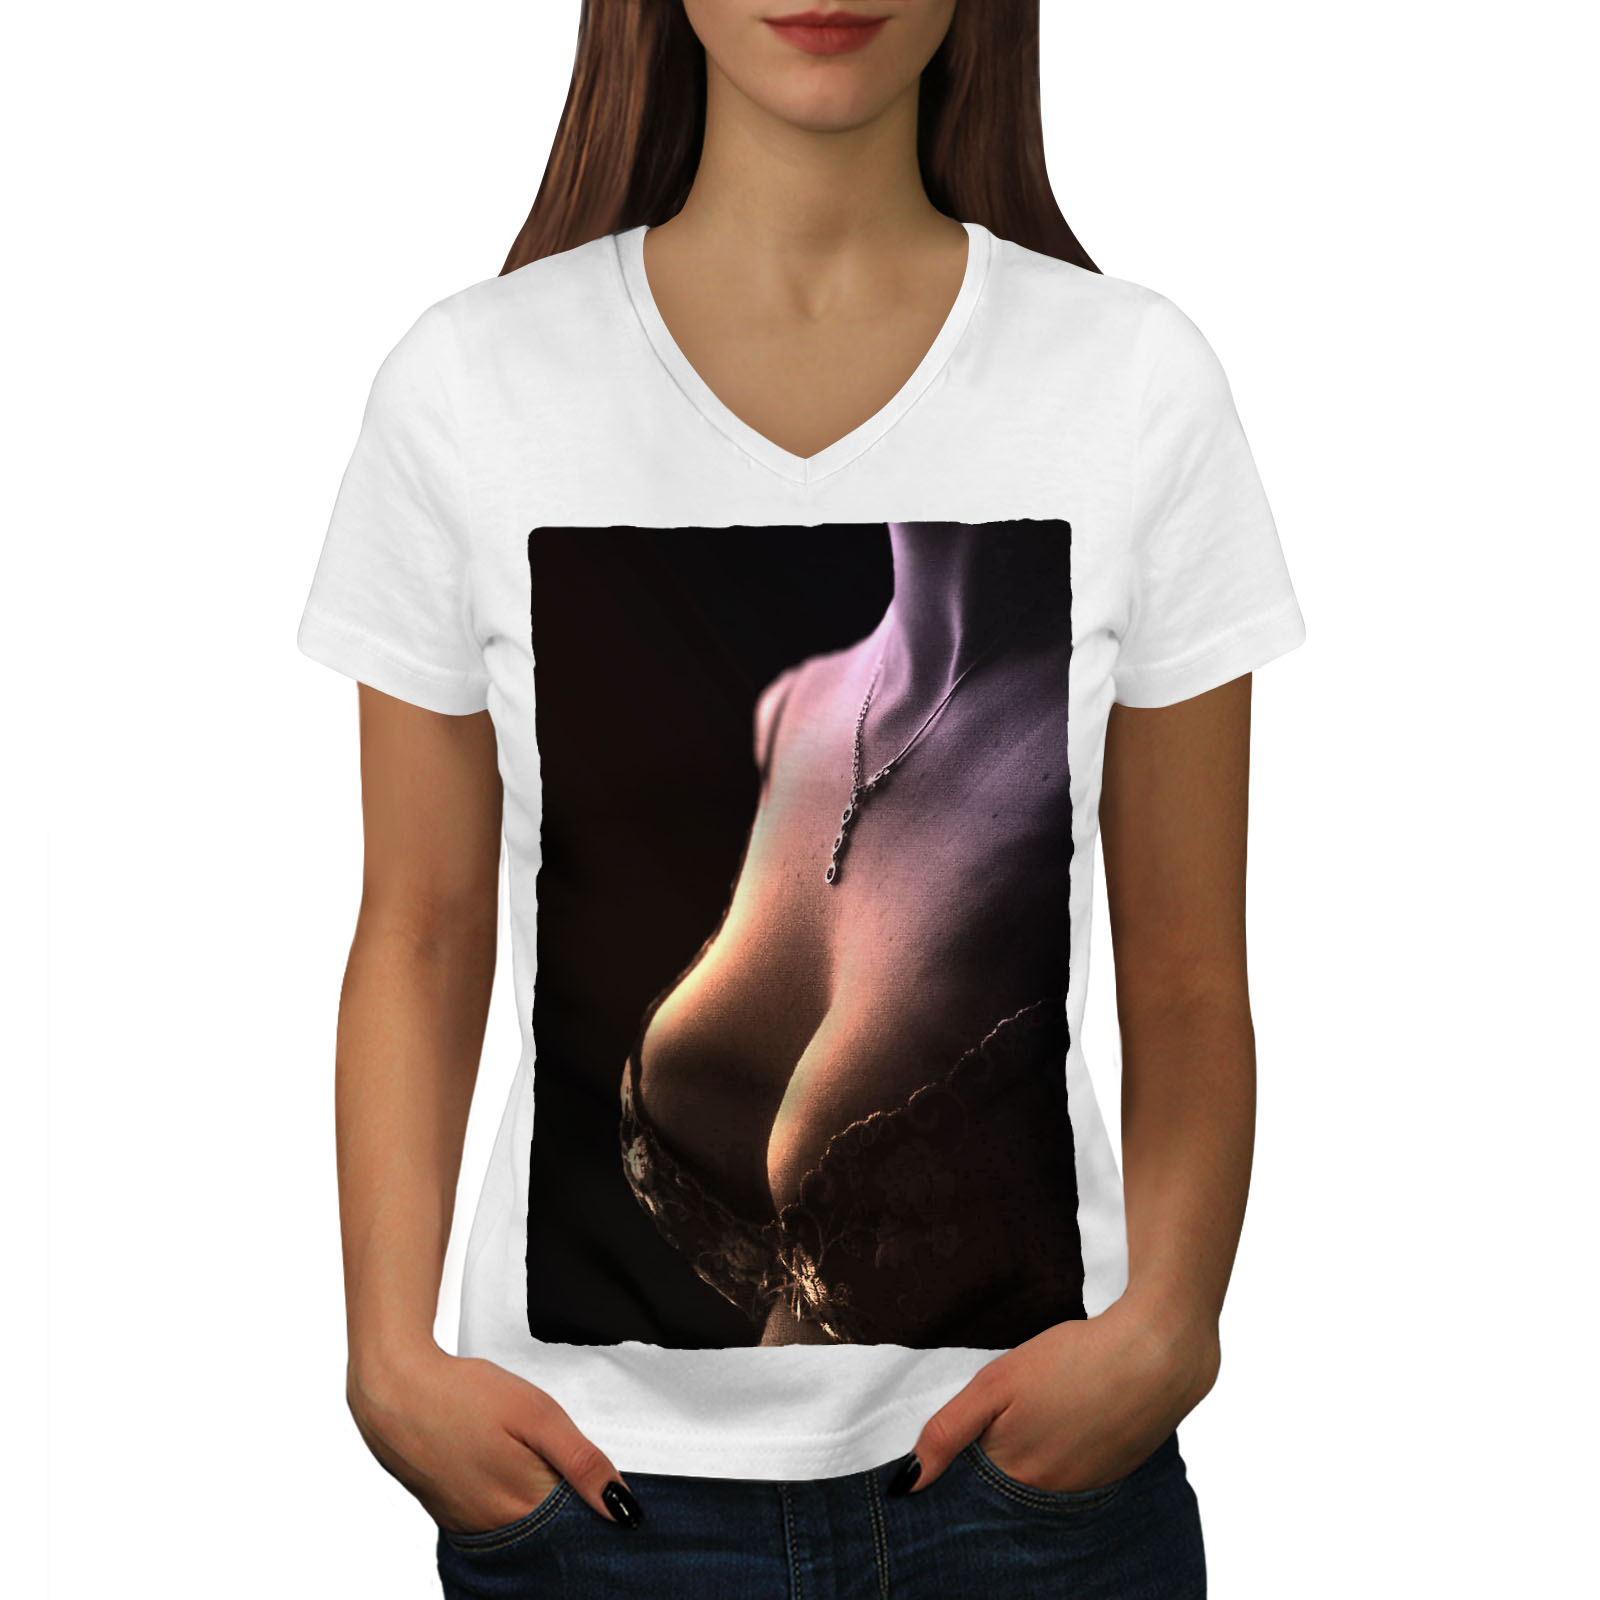 Wellcoda Sexual Woman Body Womens V Neck T Shirt Erotic Bra Graphic Design Tee Ebay